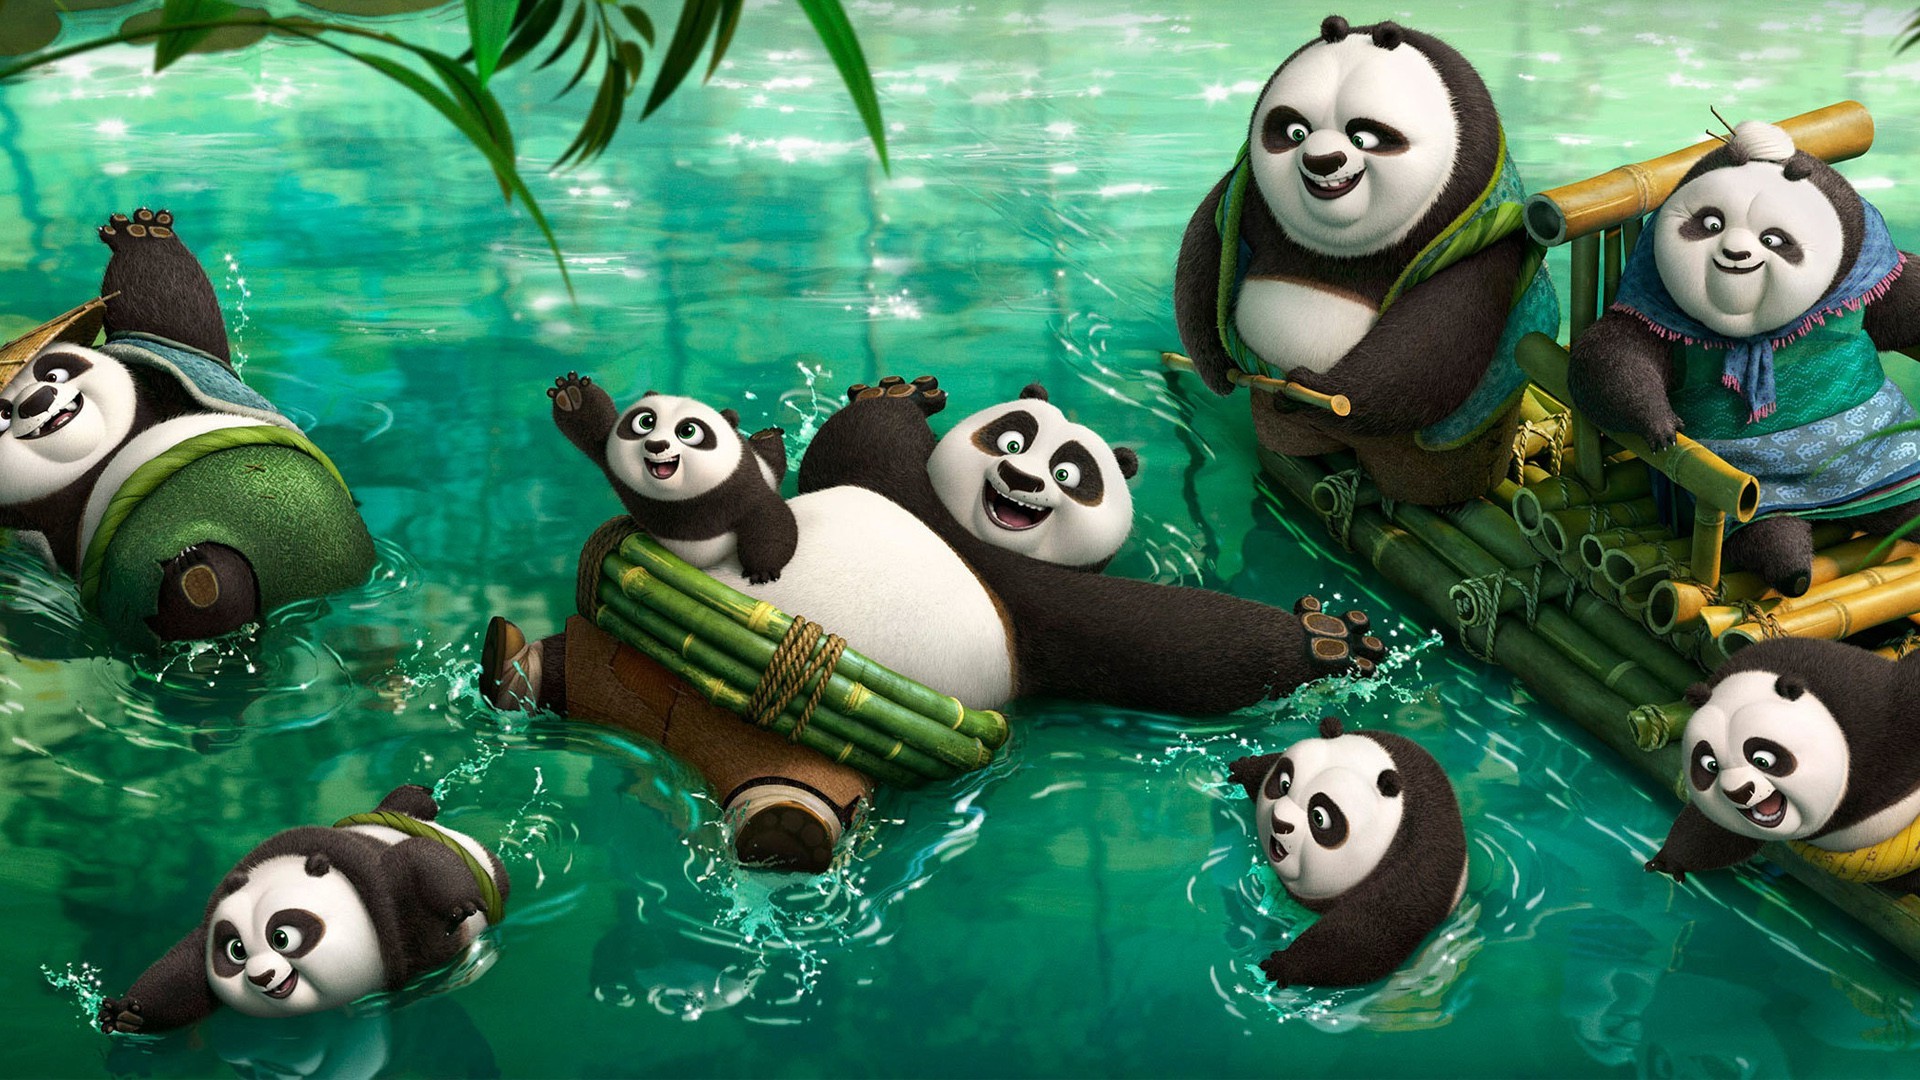 Wallpapers illustration panda Kung Fu Panda on the desktop